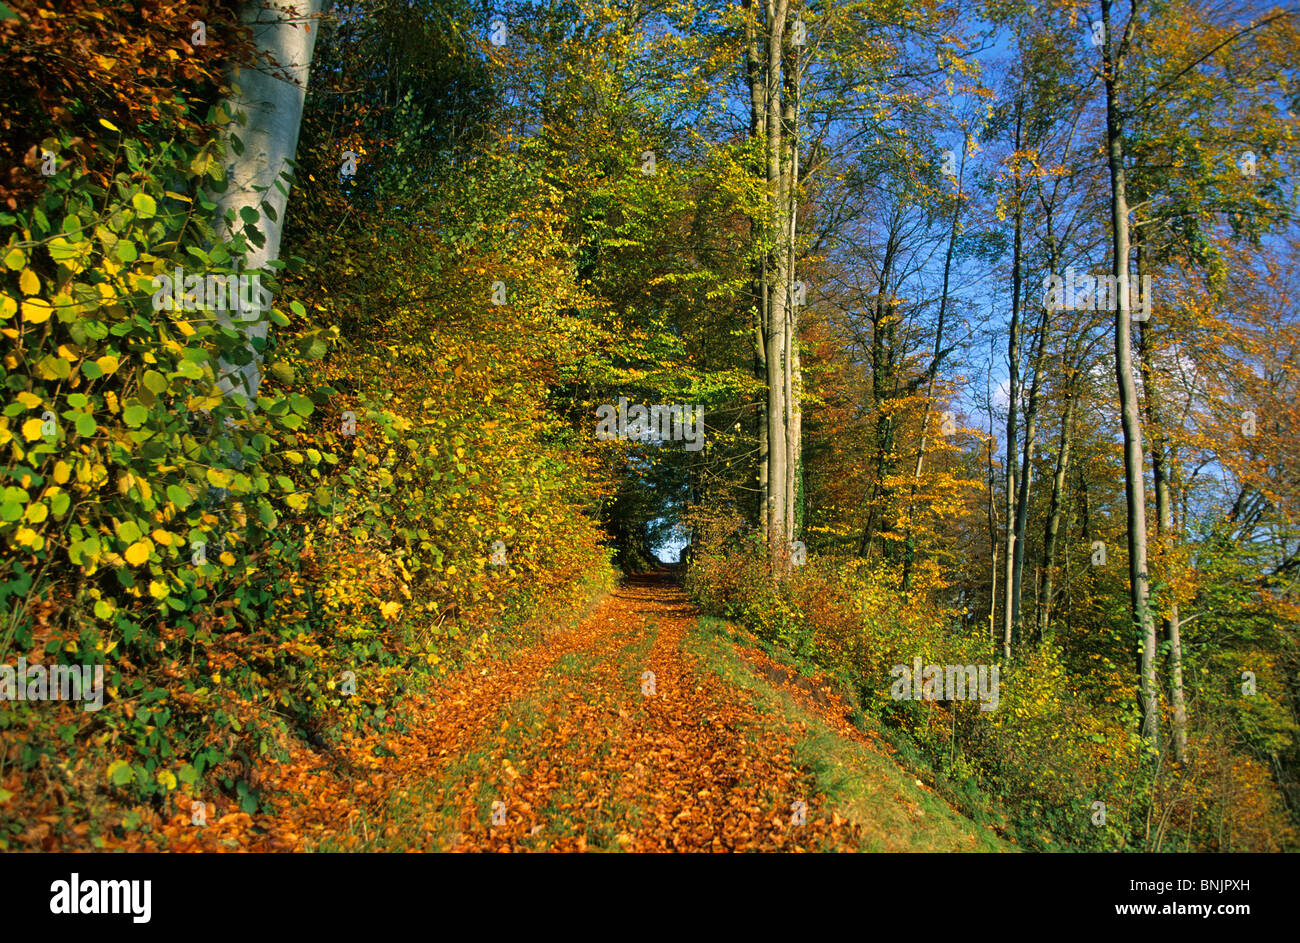 Thal Schweiz Kanton St. Gallen Weg Wald Herbst Laub Blätter Herbst  Landschaft Landschaft Natur Stockfotografie - Alamy